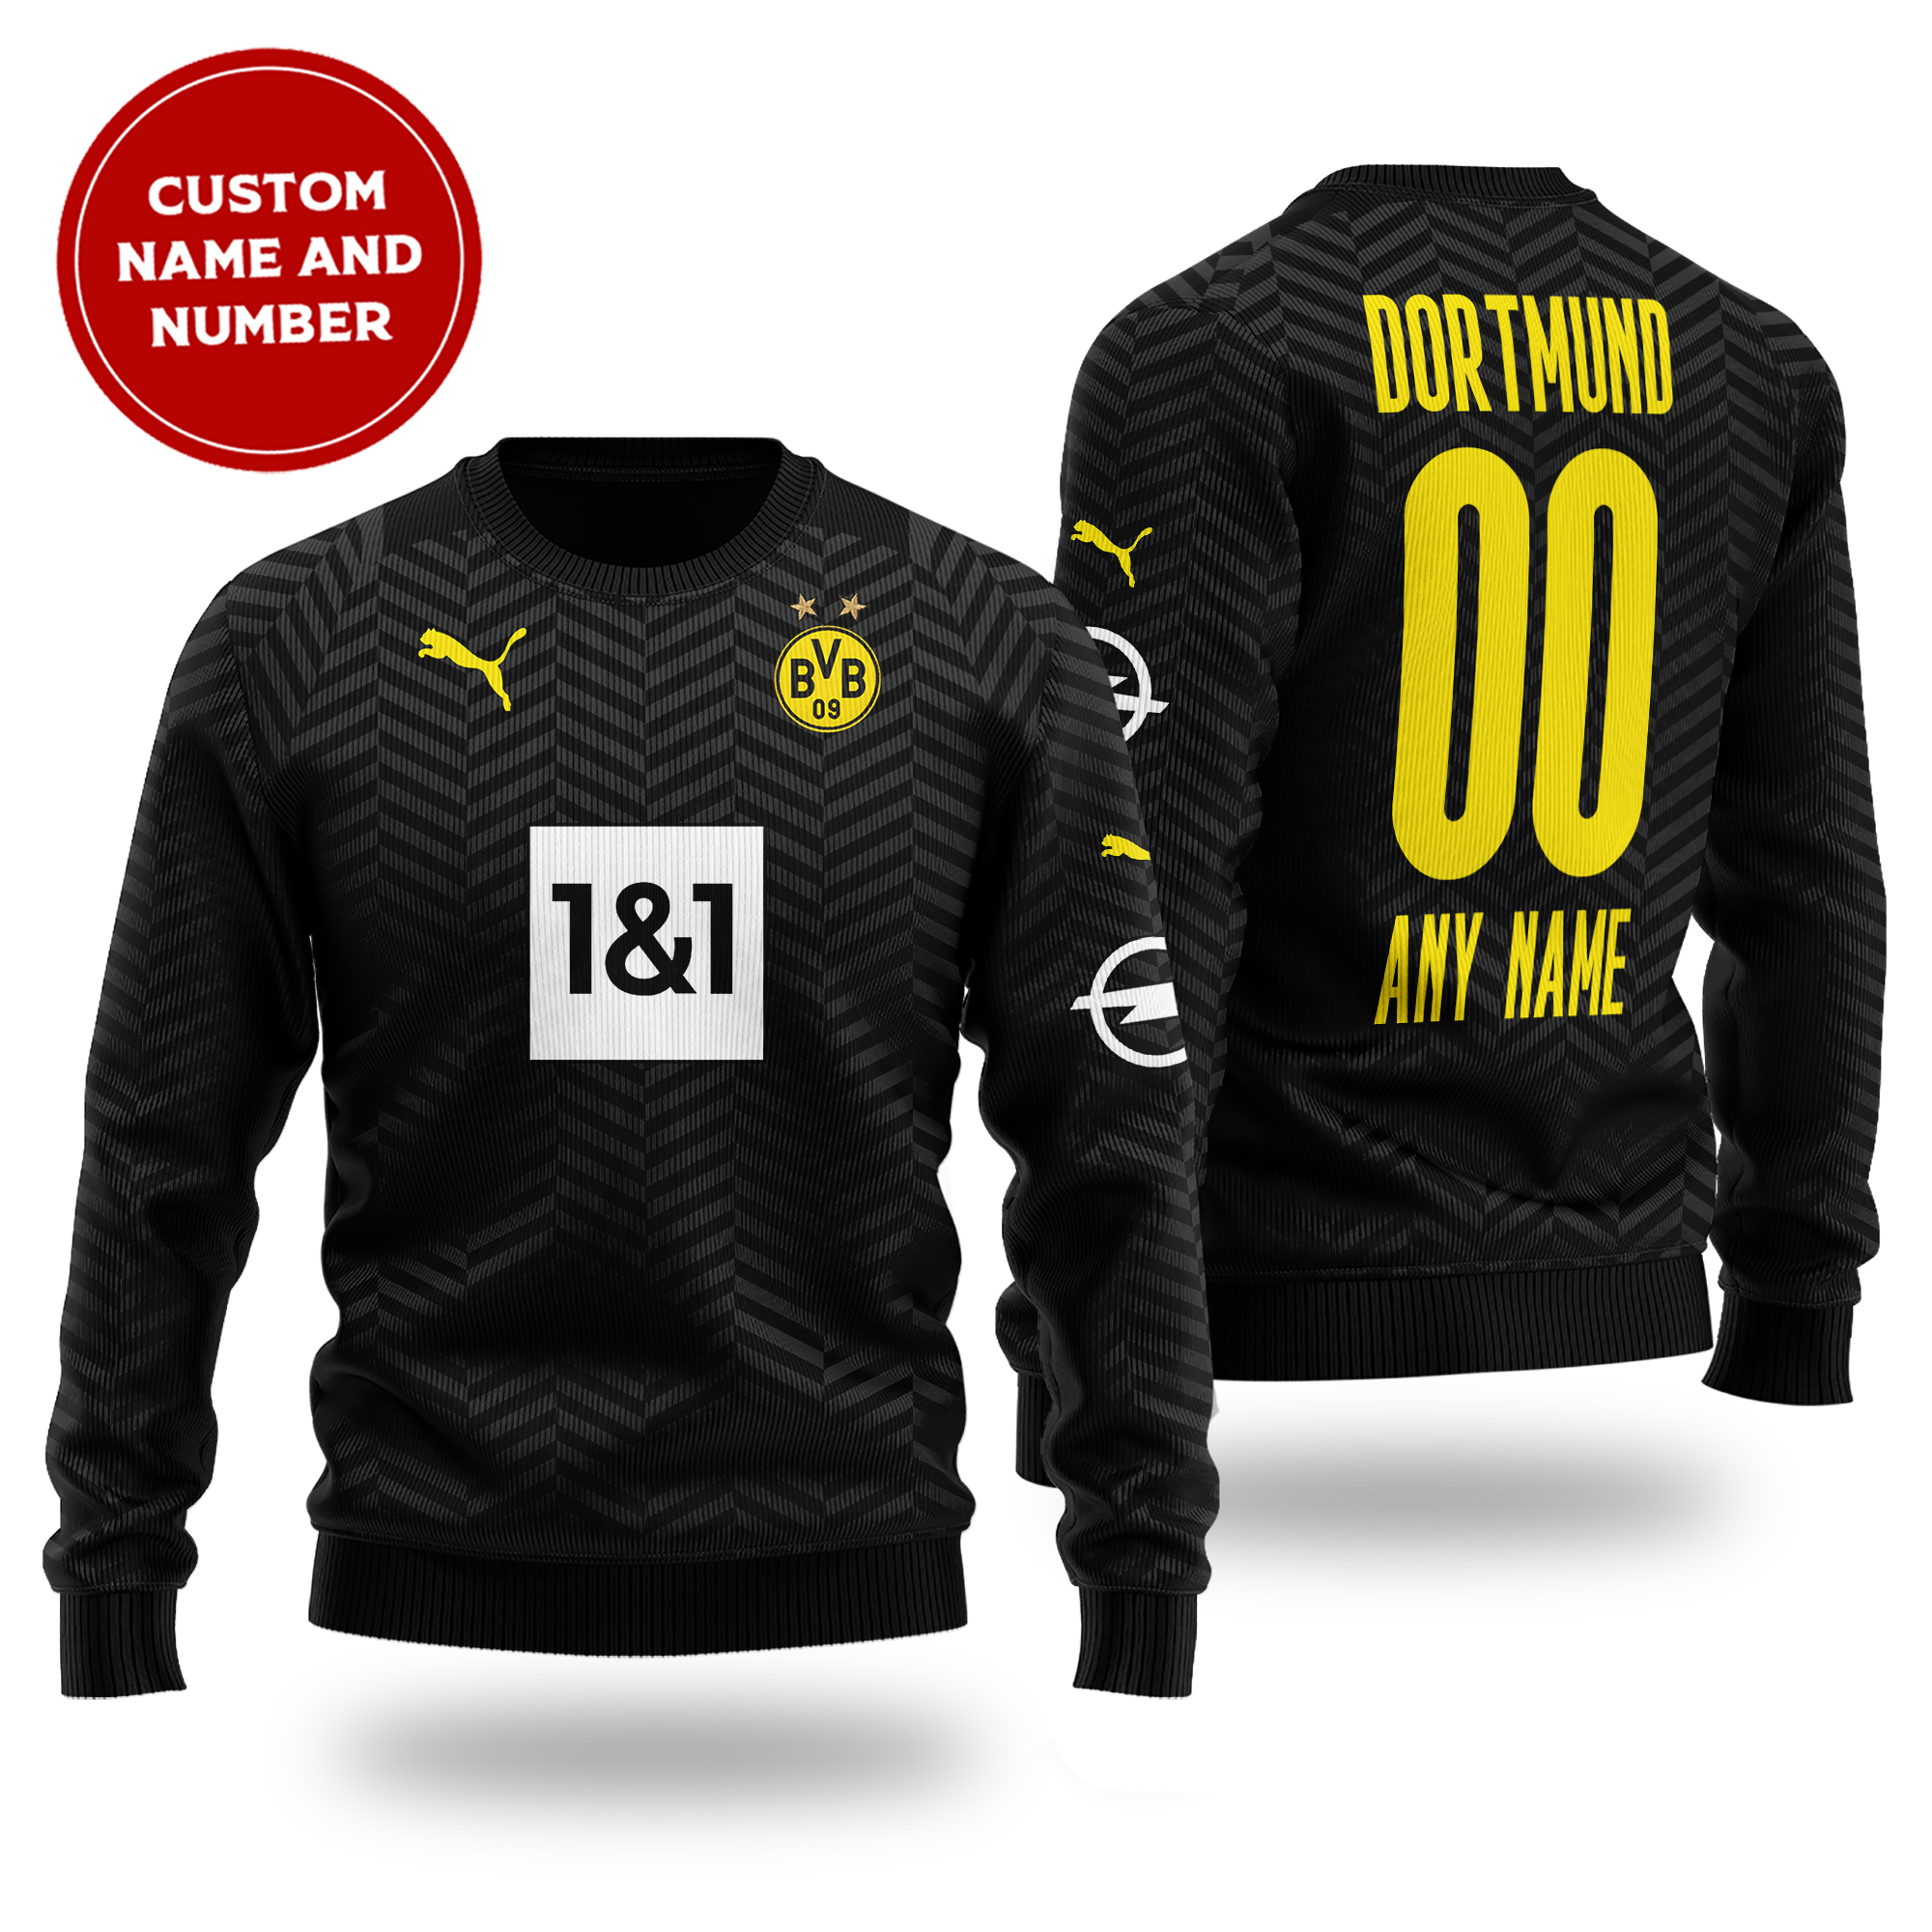 Bundesliga Borussia Dortmund FC away kit cutom name and number sweater